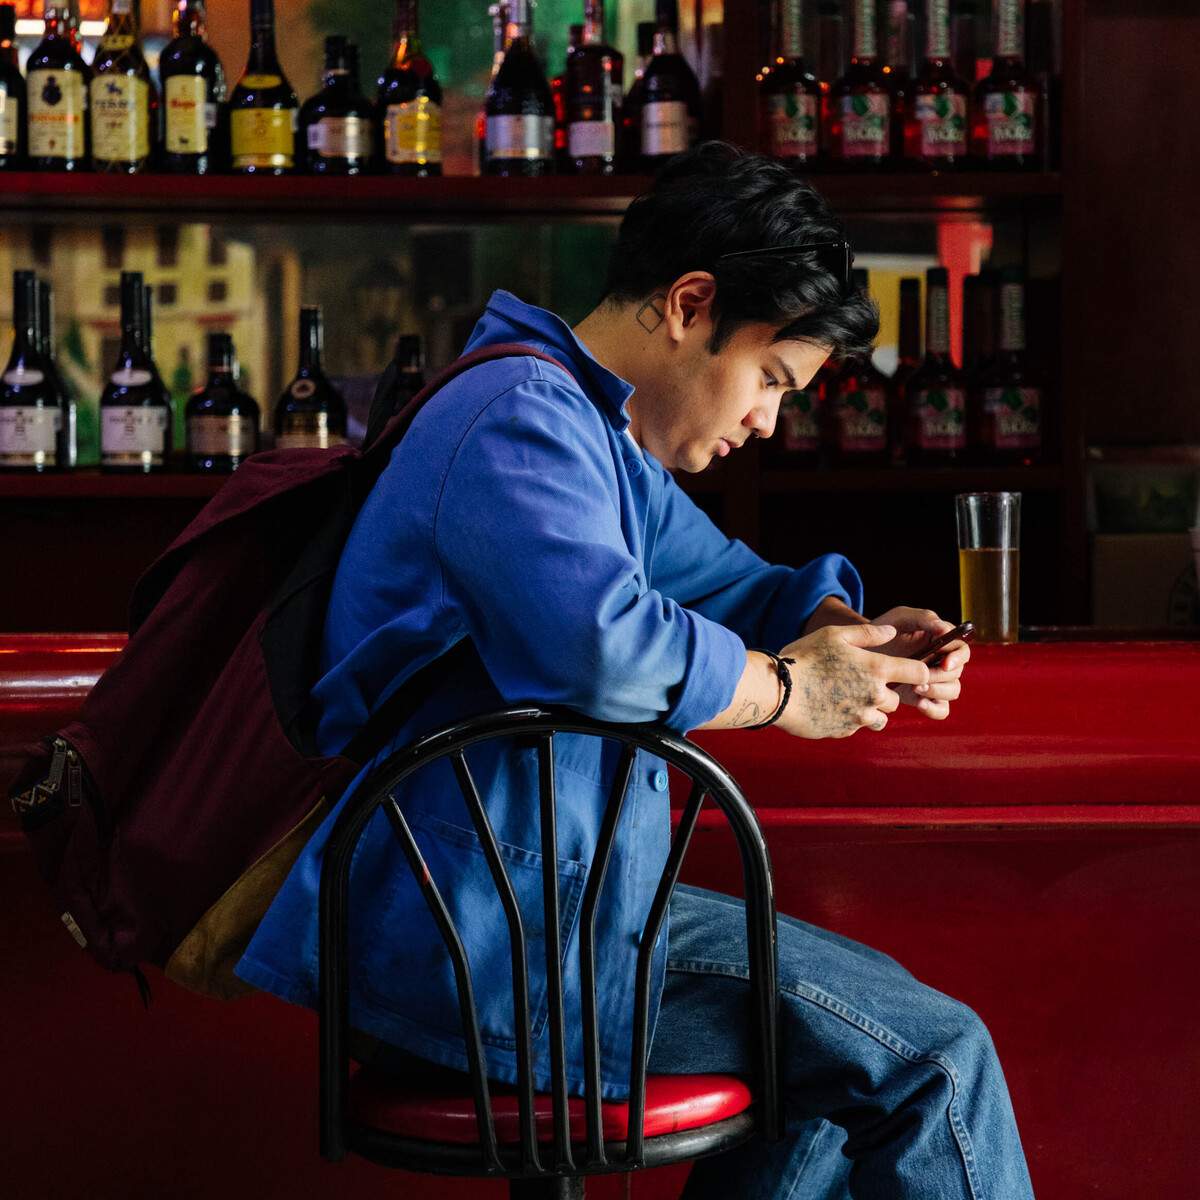 Gen z customer looking at his phone at a restaurant